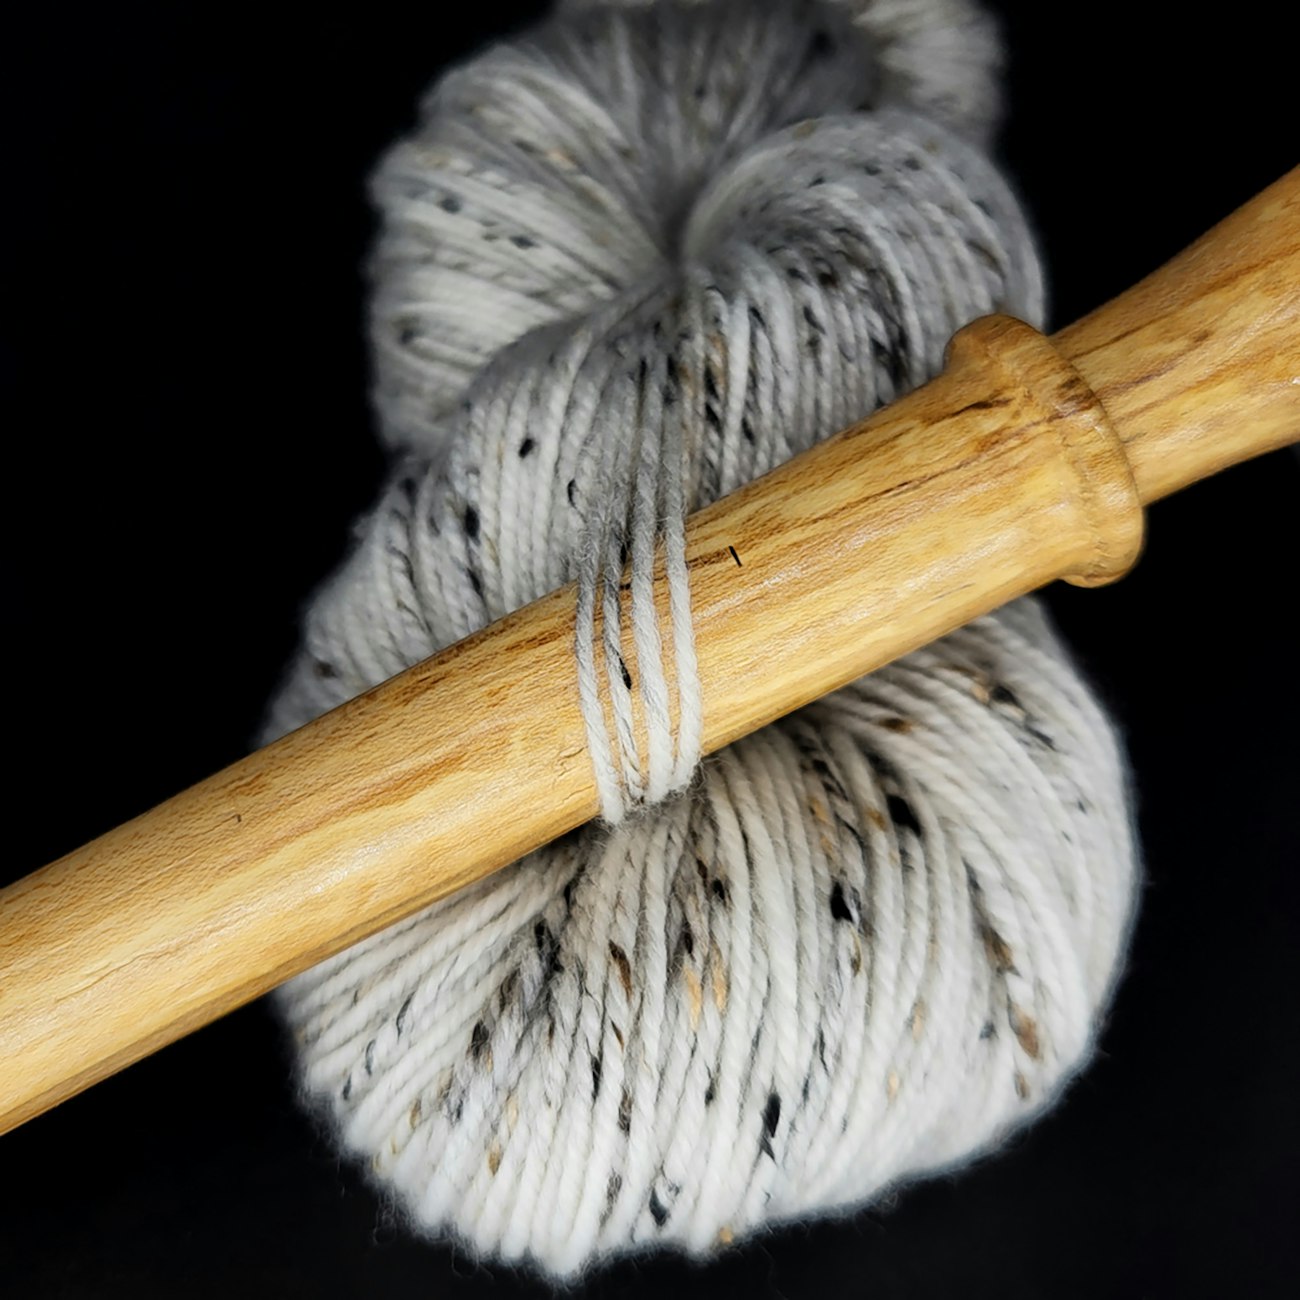 White yarn with brown and black flecks